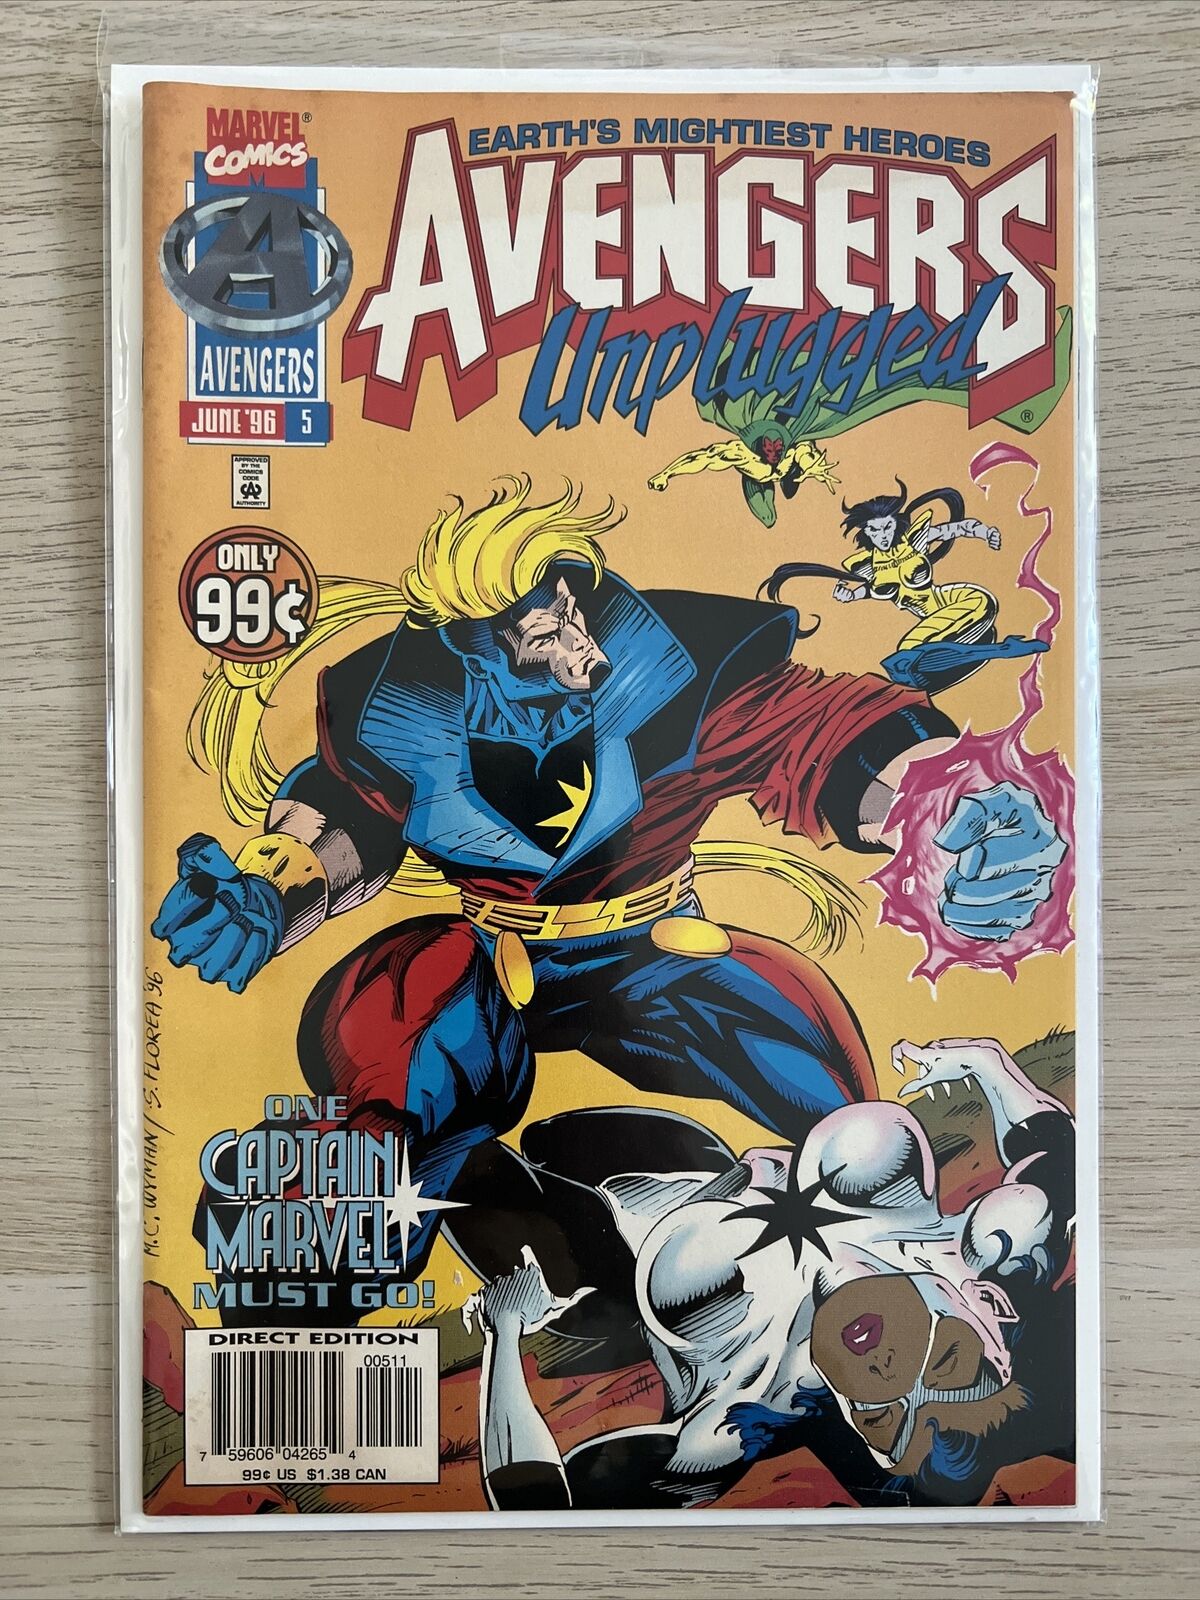 Marvel Comics Avengers Unplugged #5 (June 1996) - 1st App of Monica Rambeau